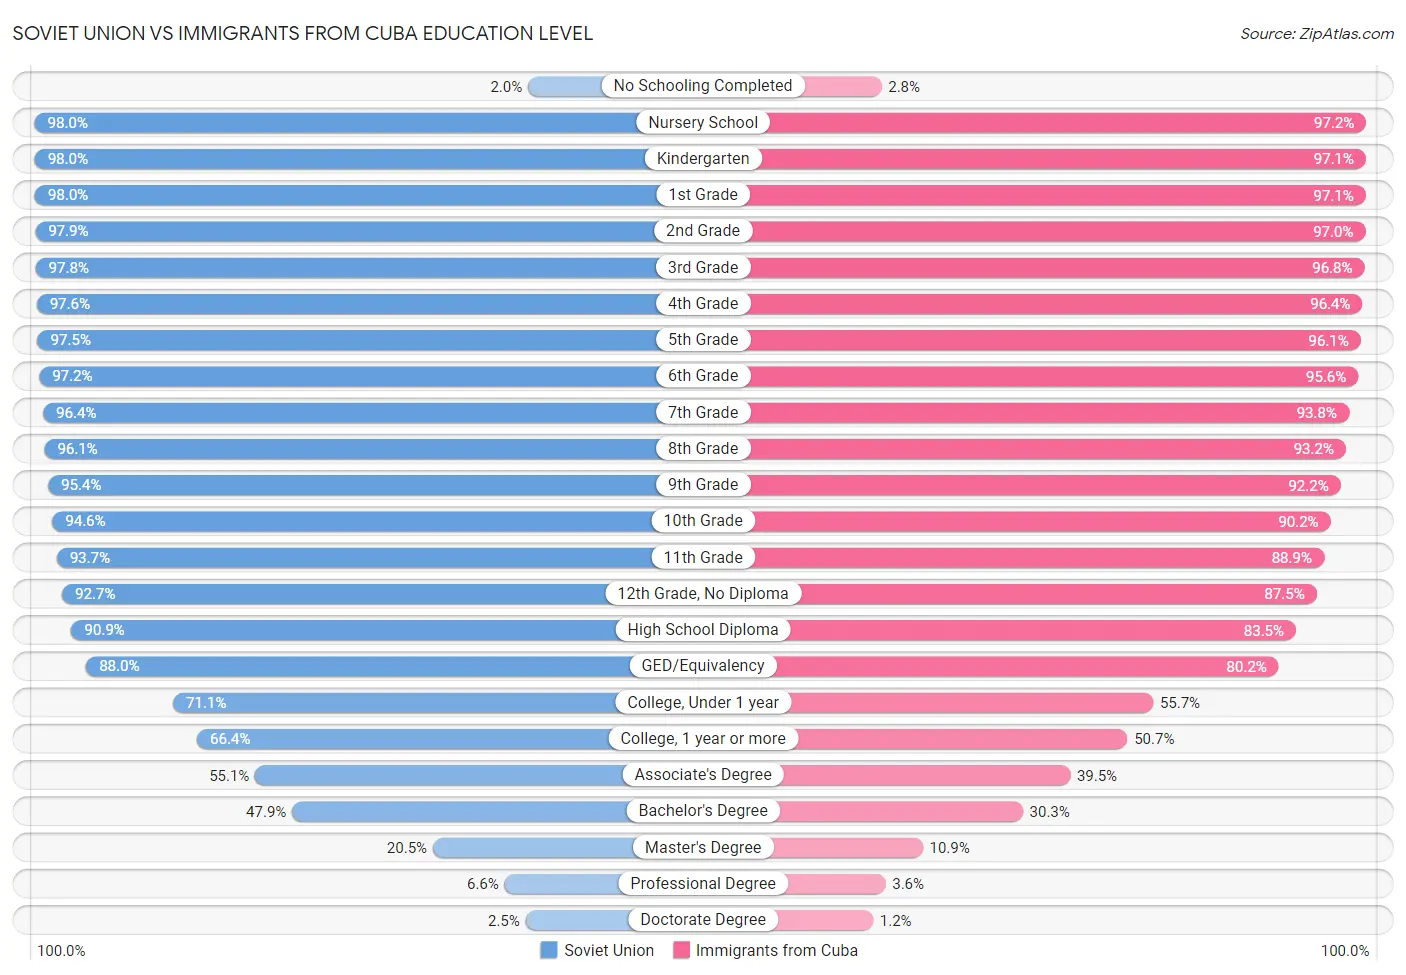 Soviet Union vs Immigrants from Cuba Education Level